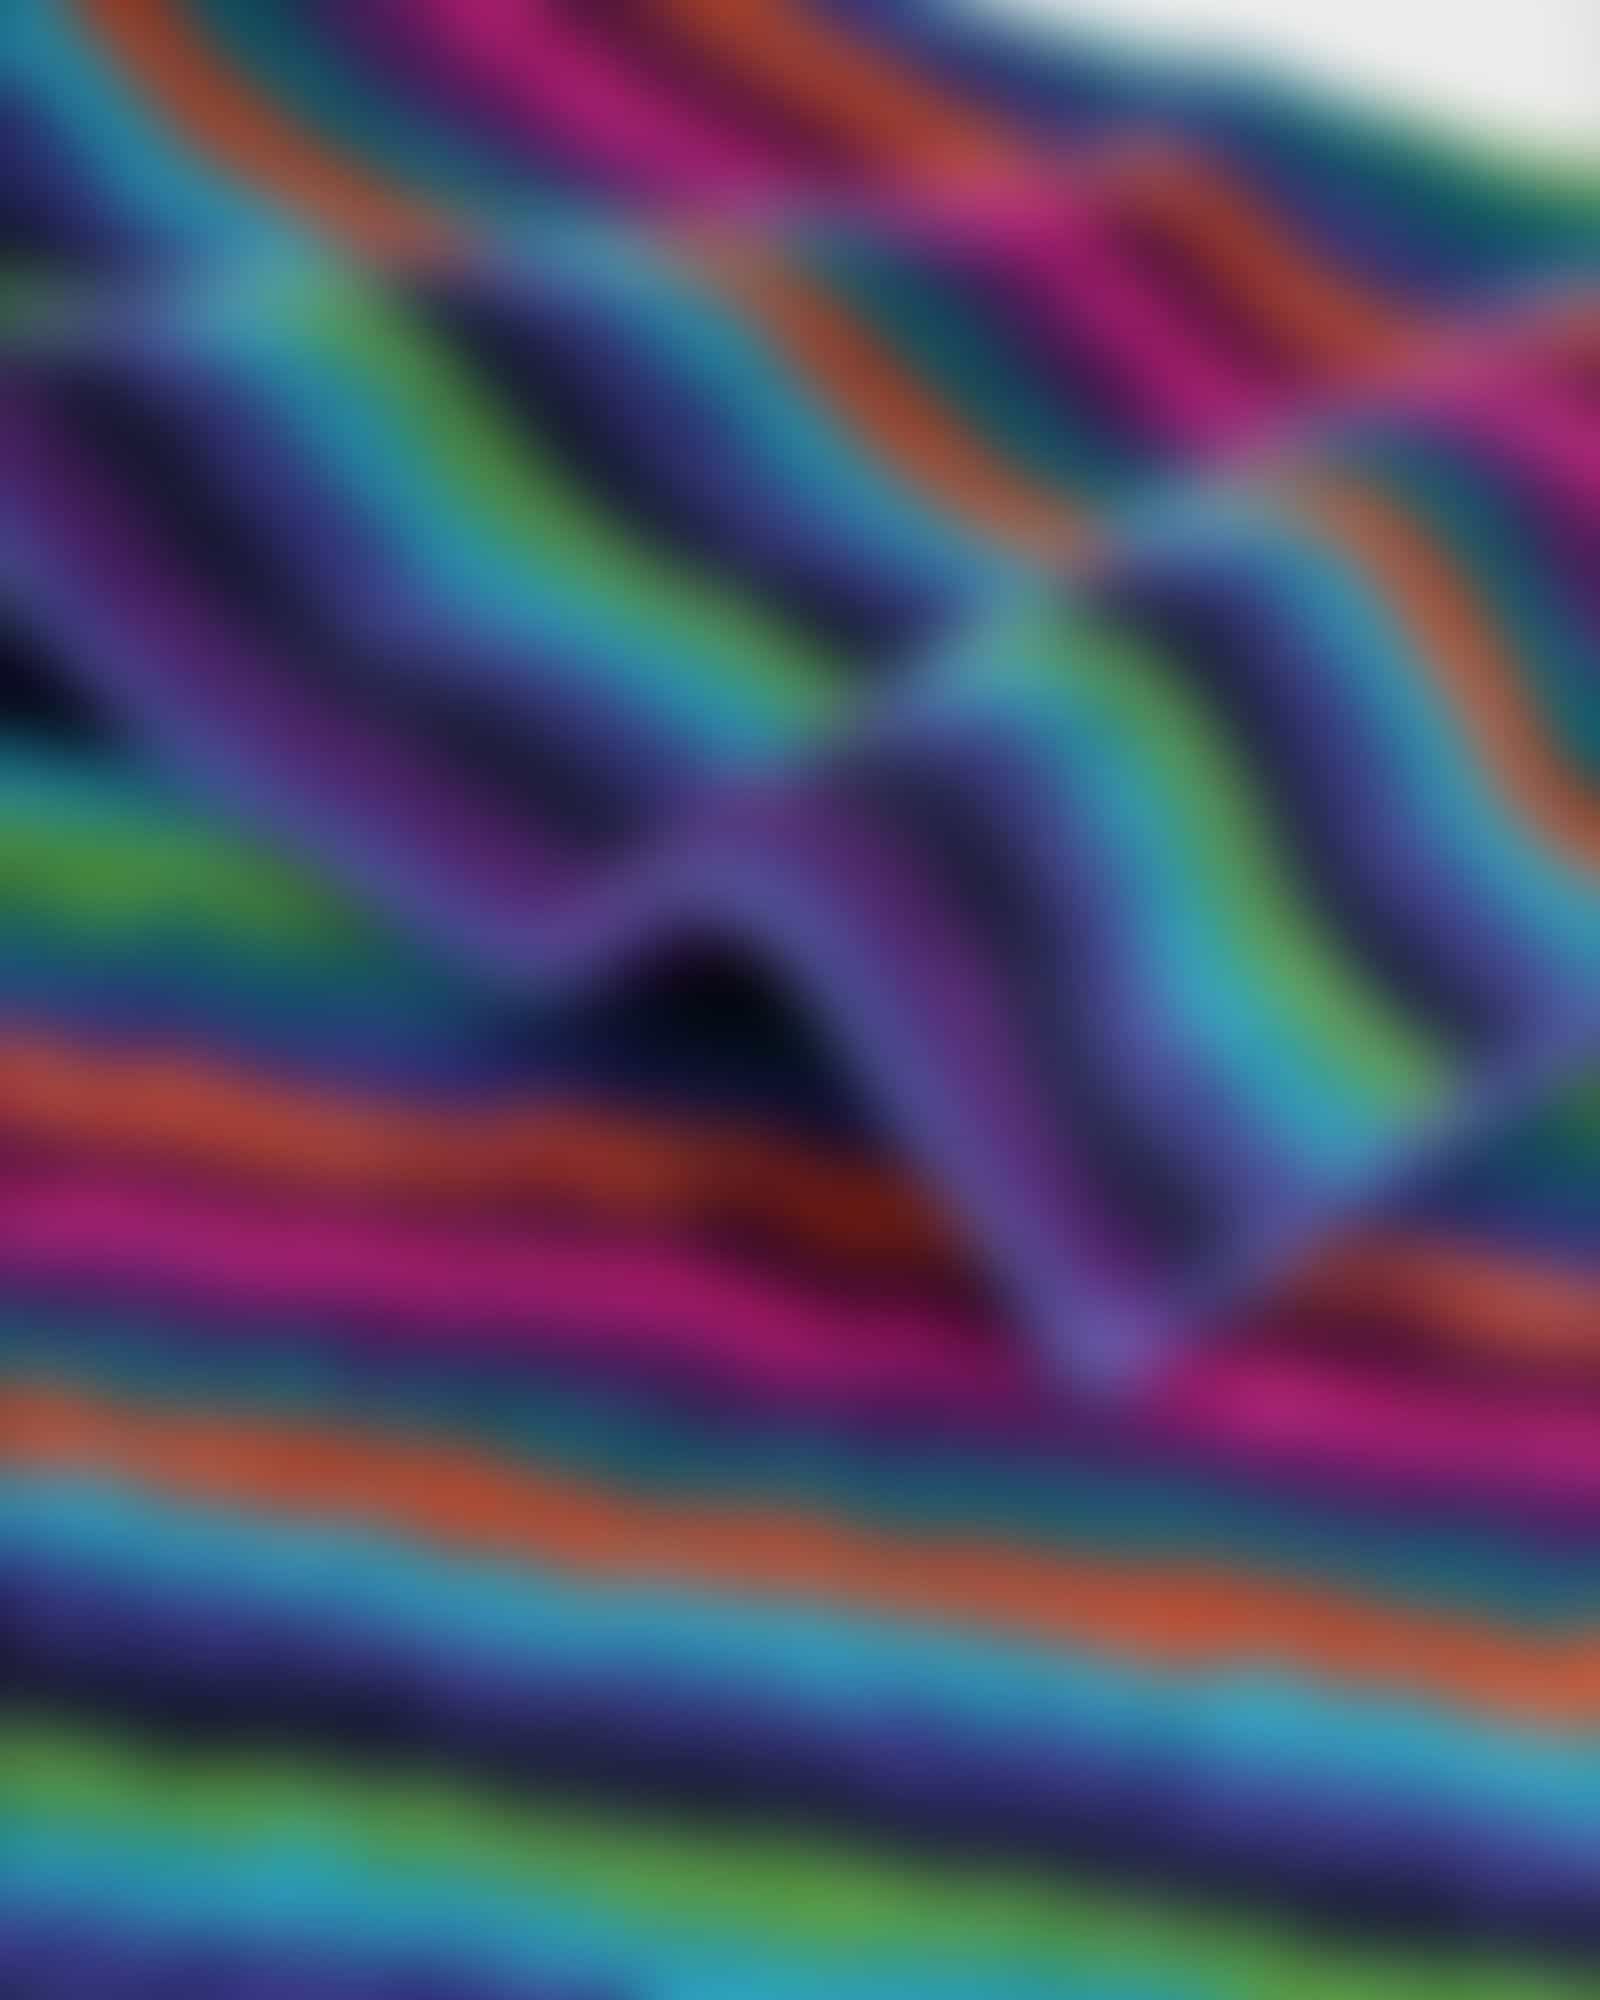 Cawö Home - Badteppich Life Style 7048 - Farbe: 84 - multicolor Detailbild 1